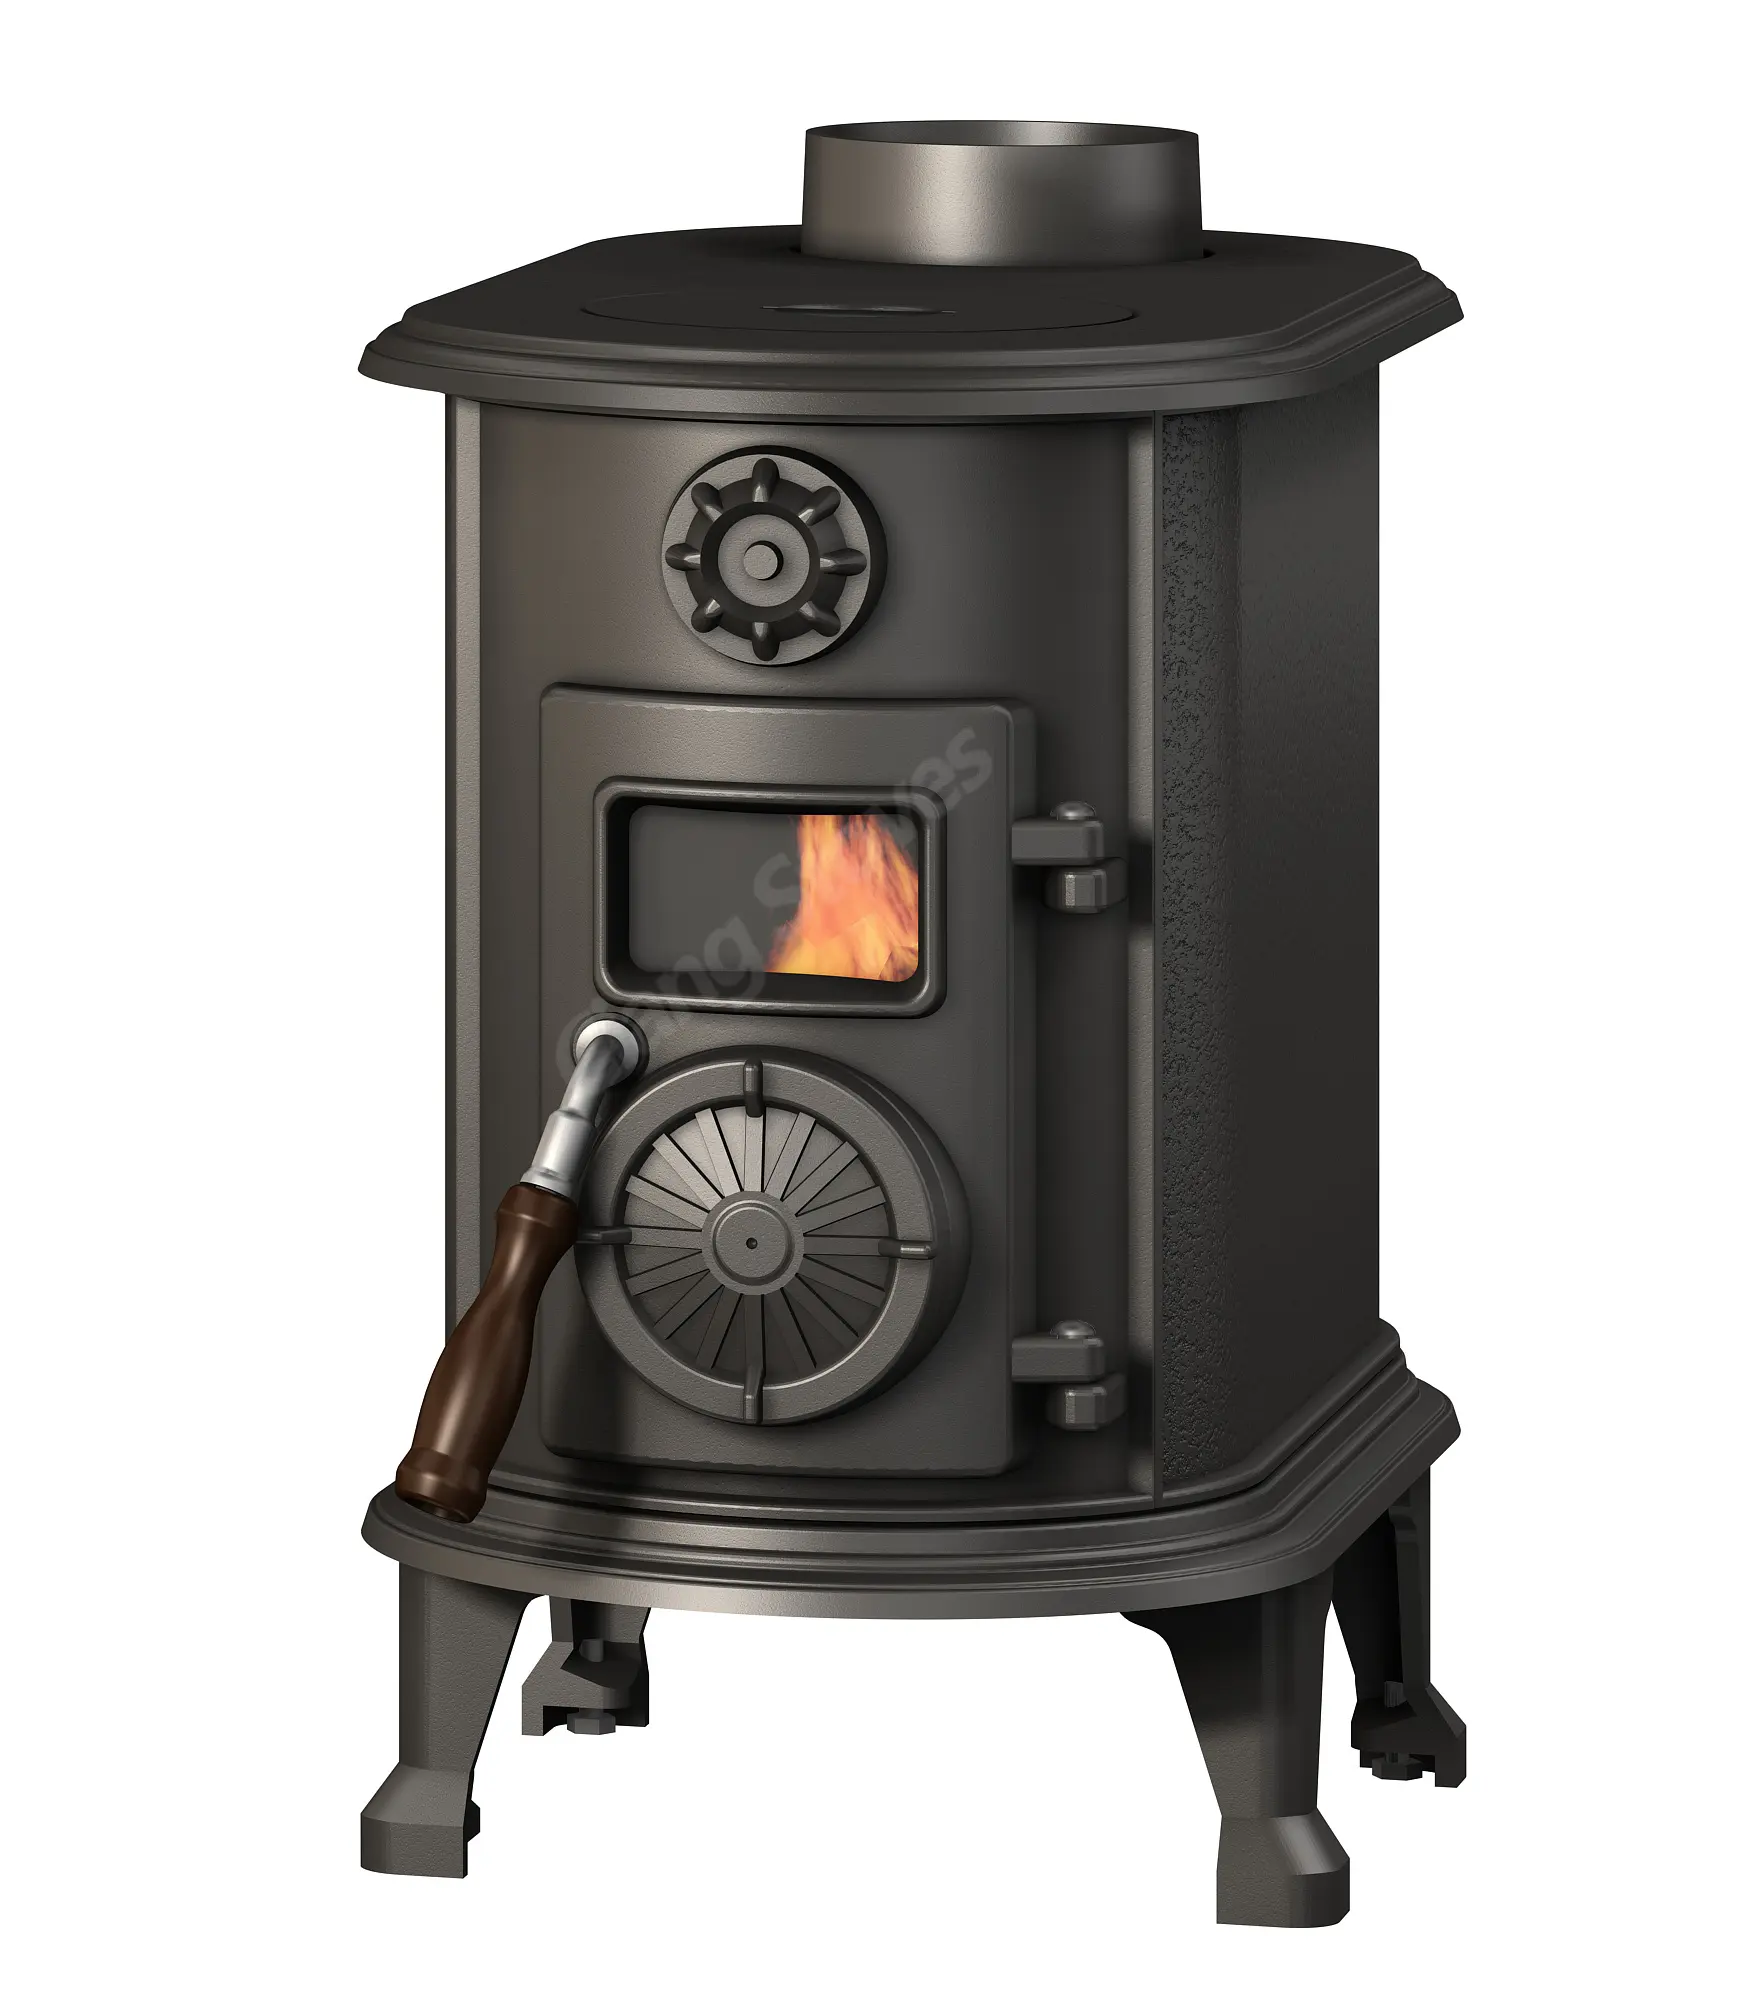 Cast iron stove grates fireplace wood burning wood burning cooking stove indoor